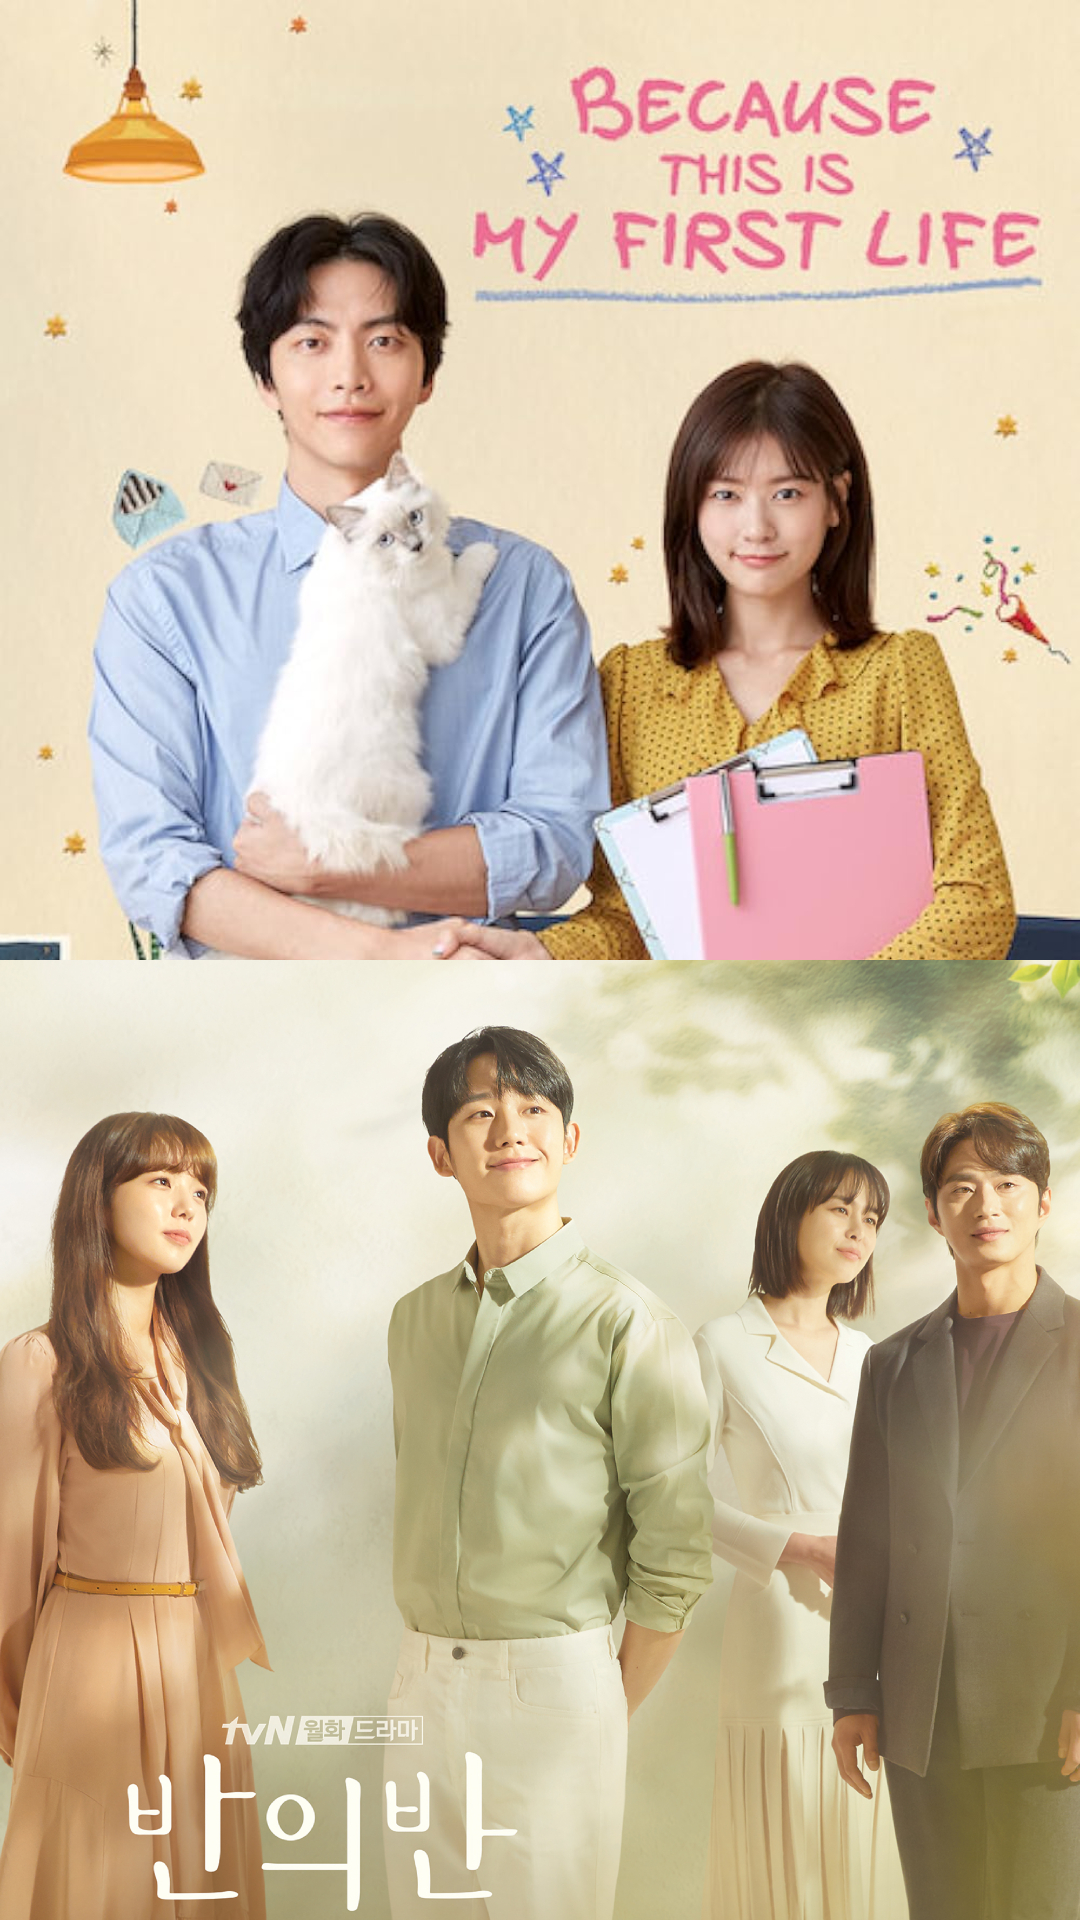 7 Light-hearted K-Dramas you can binge watch